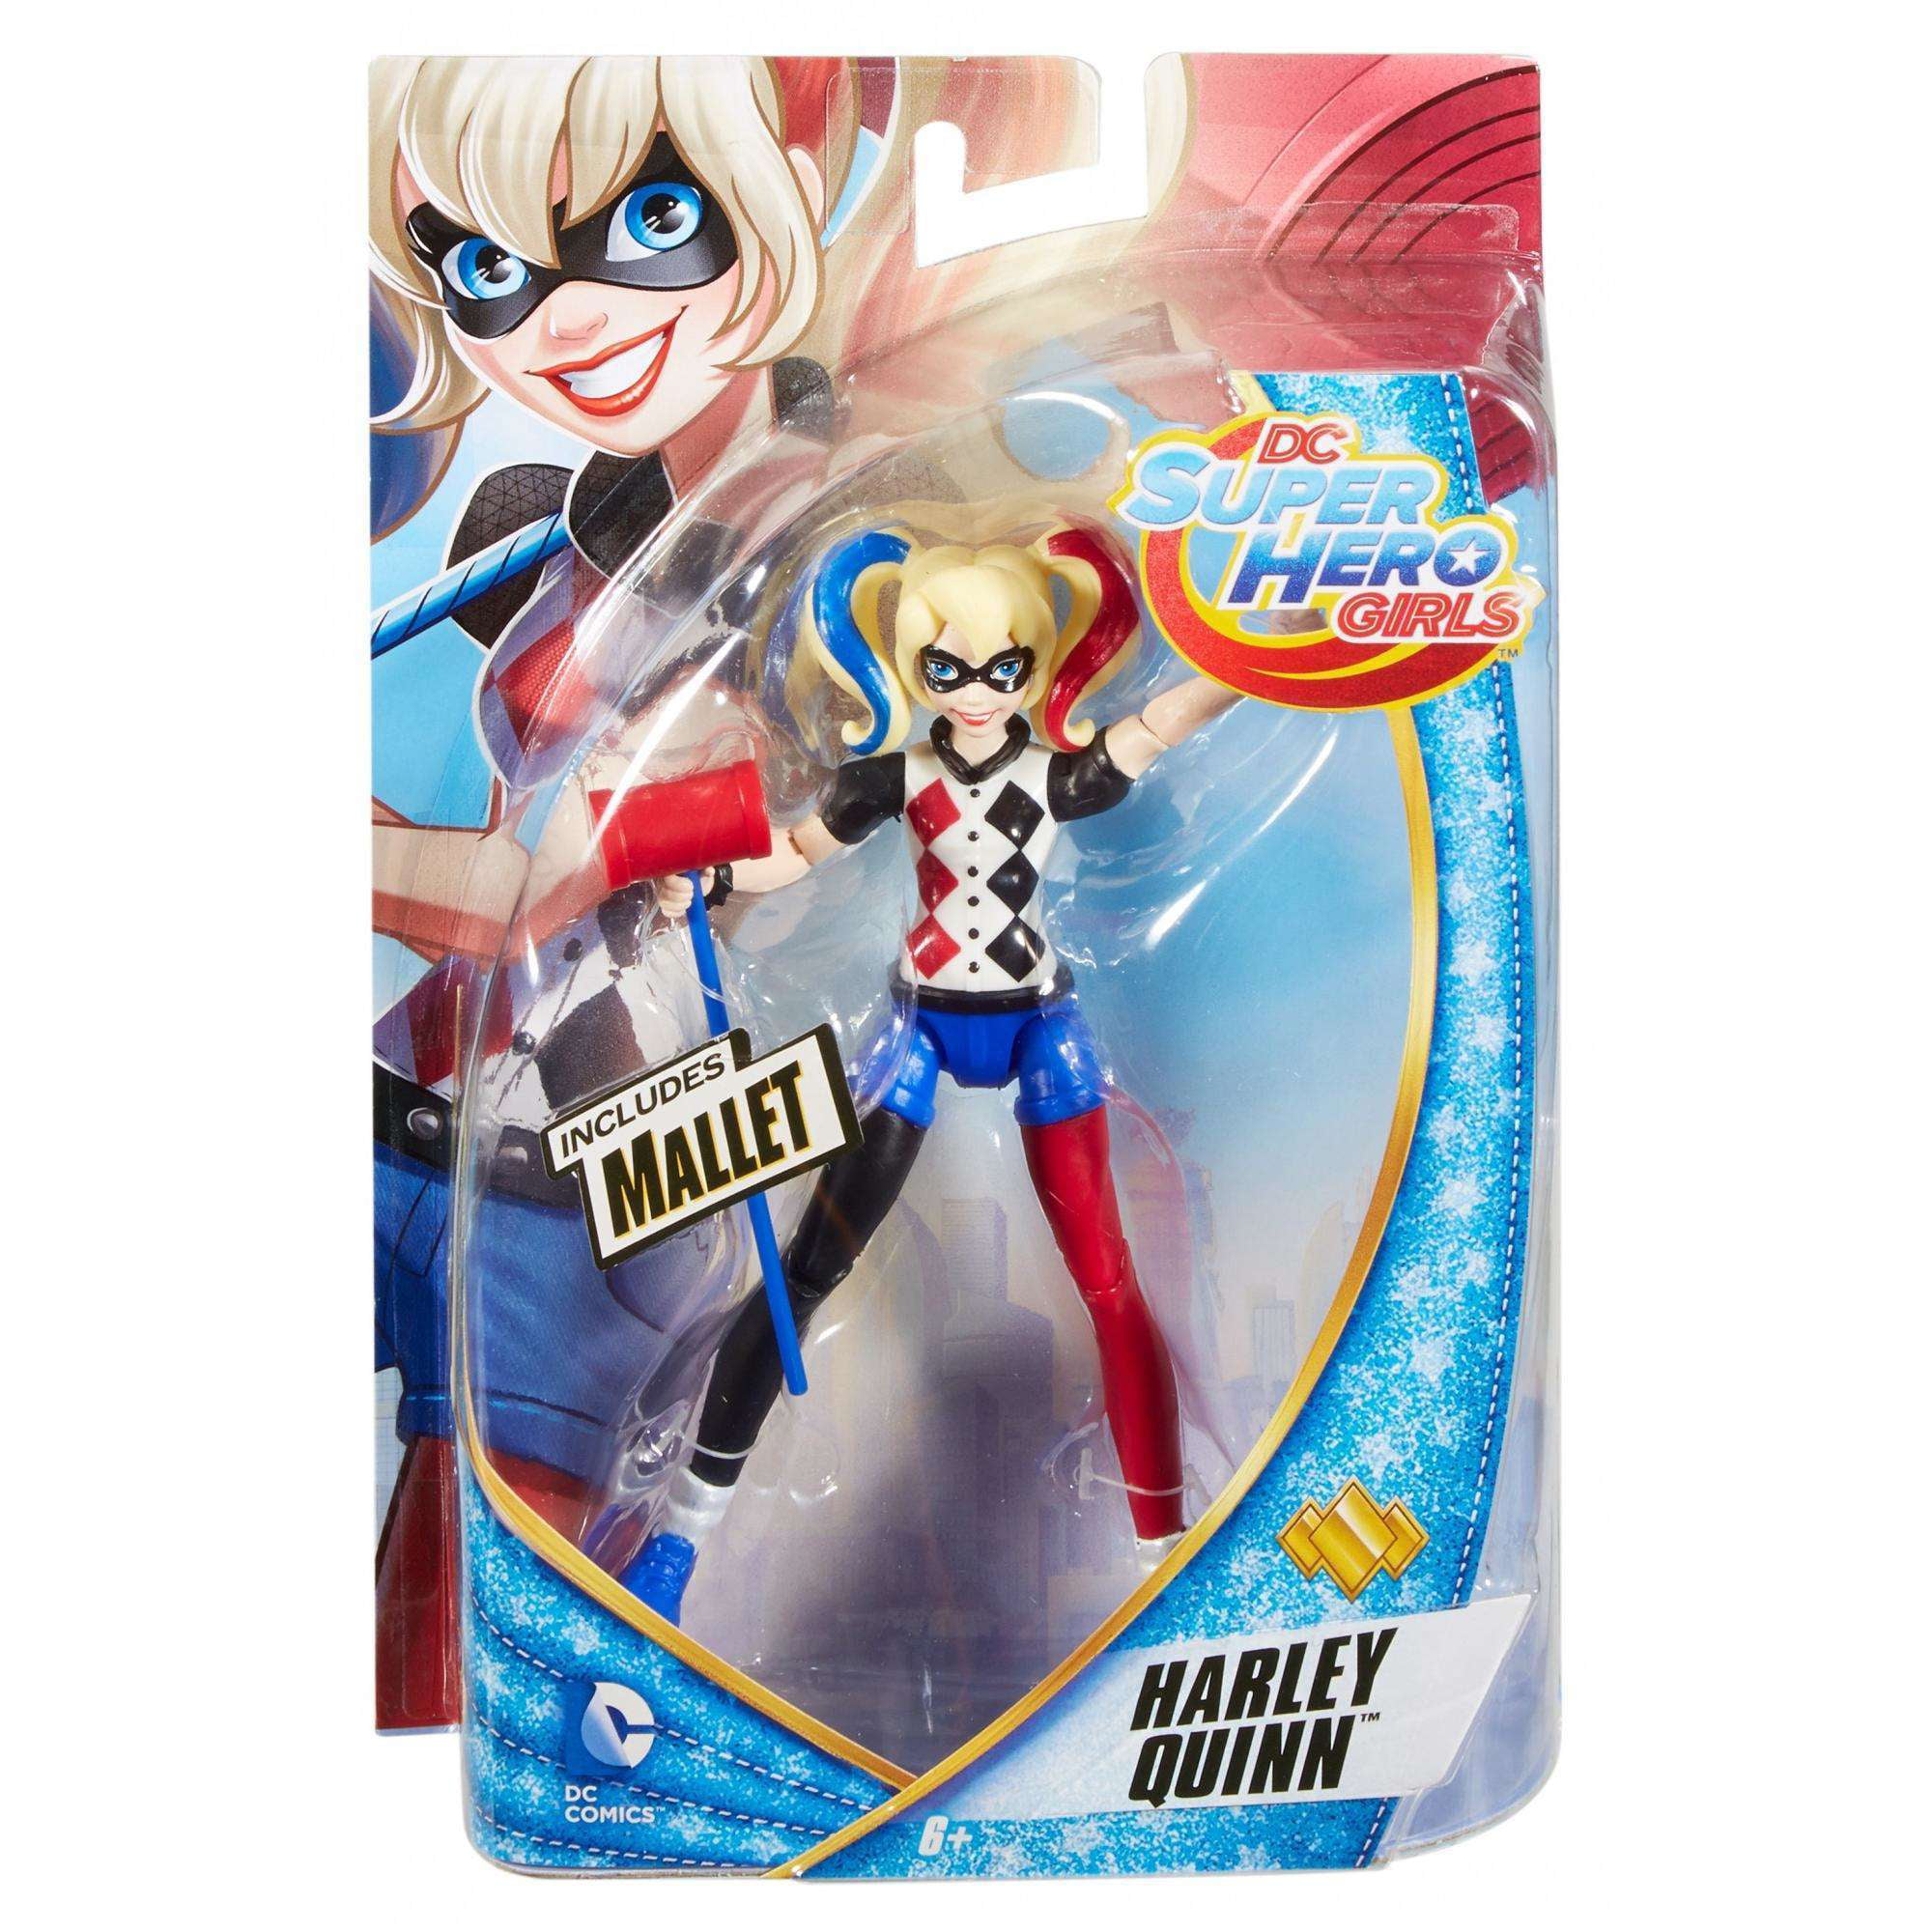 DC Superhero Girls 6 Inch Action Figure Harley Quinn for sale online 